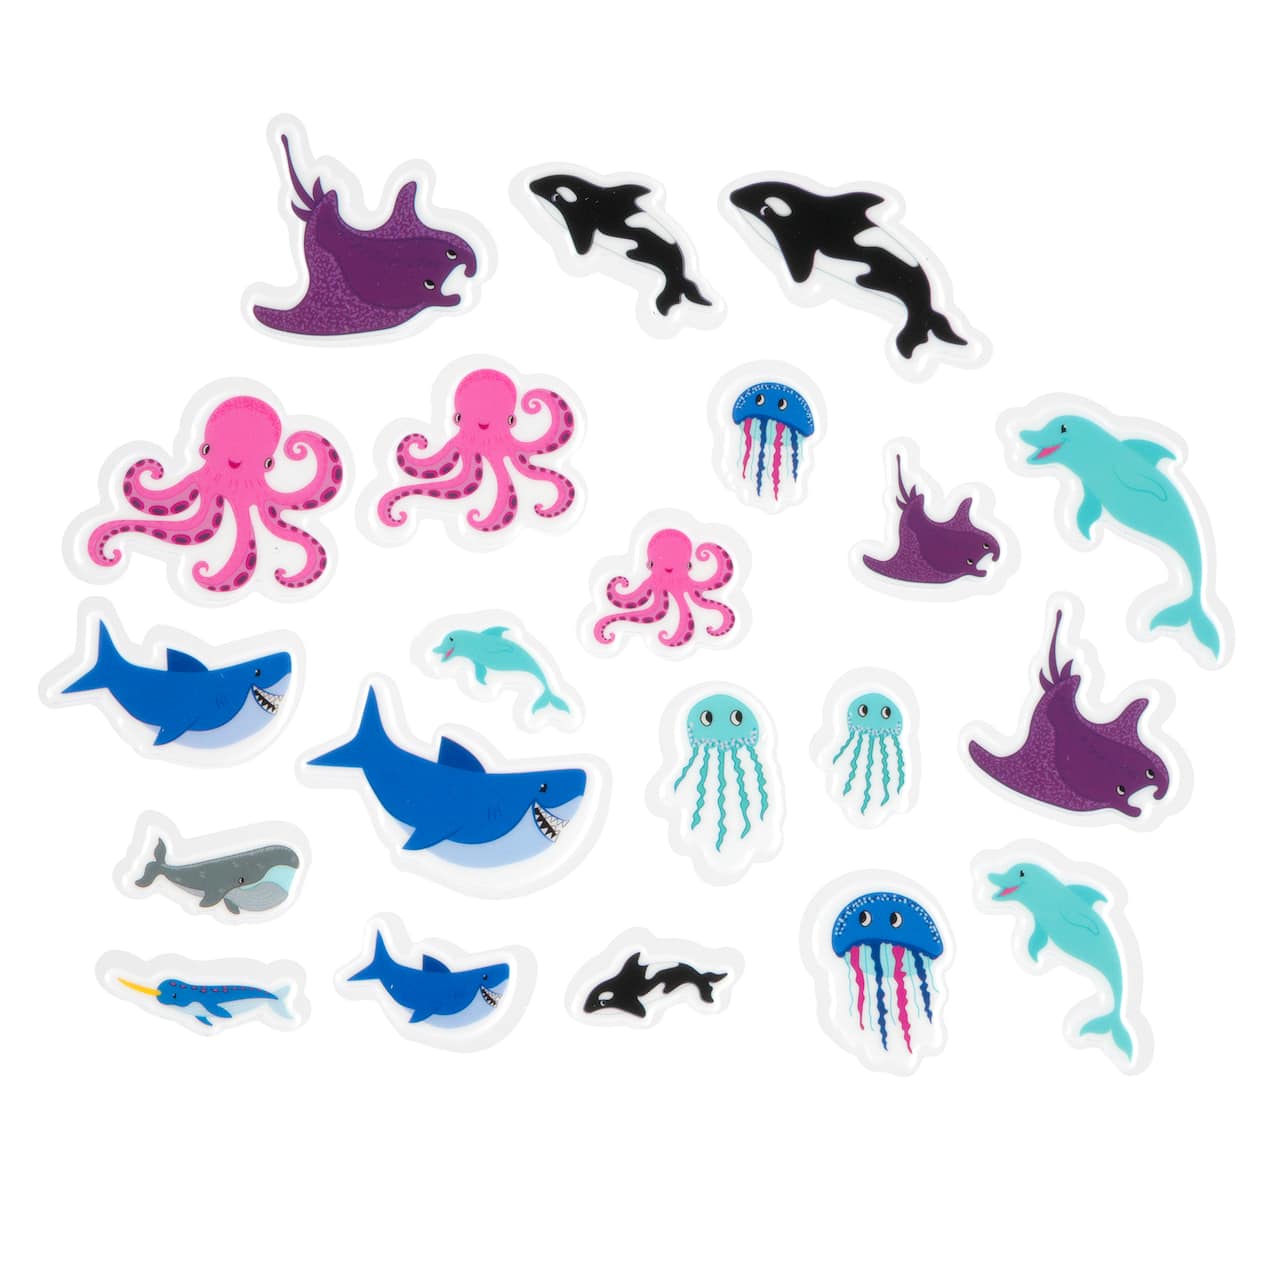 Sea Life Puffy Stickers by Creatology&#x2122;